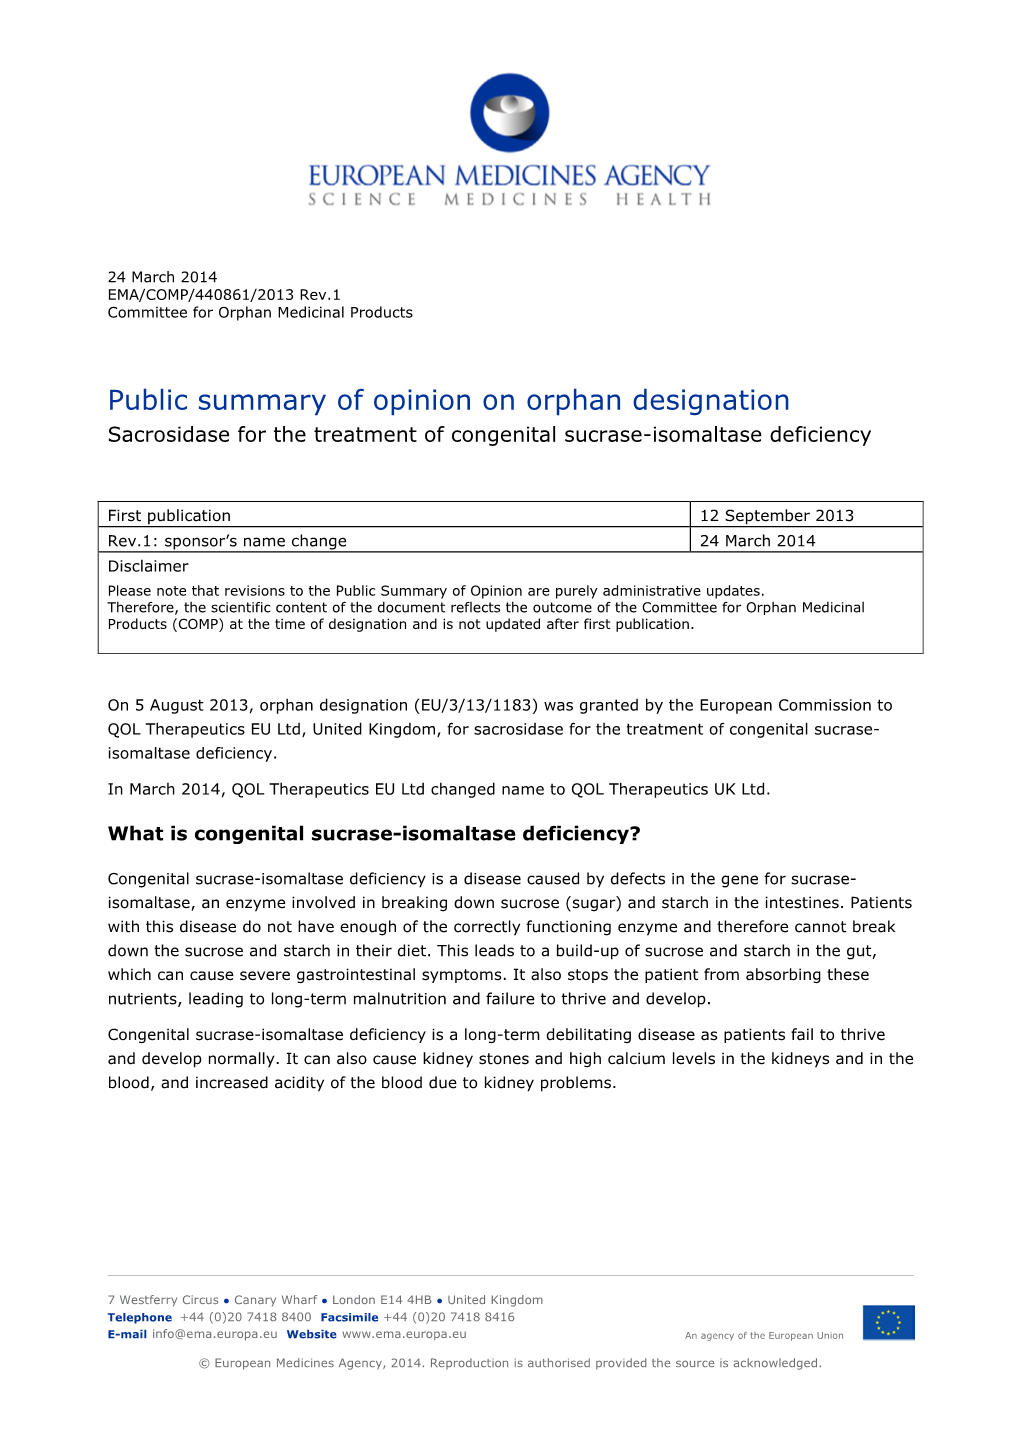 Public Summary of Opinion on Orphan Designation Sacrosidase for the Treatment of Congenital Sucrase-Isomaltase Deficiency